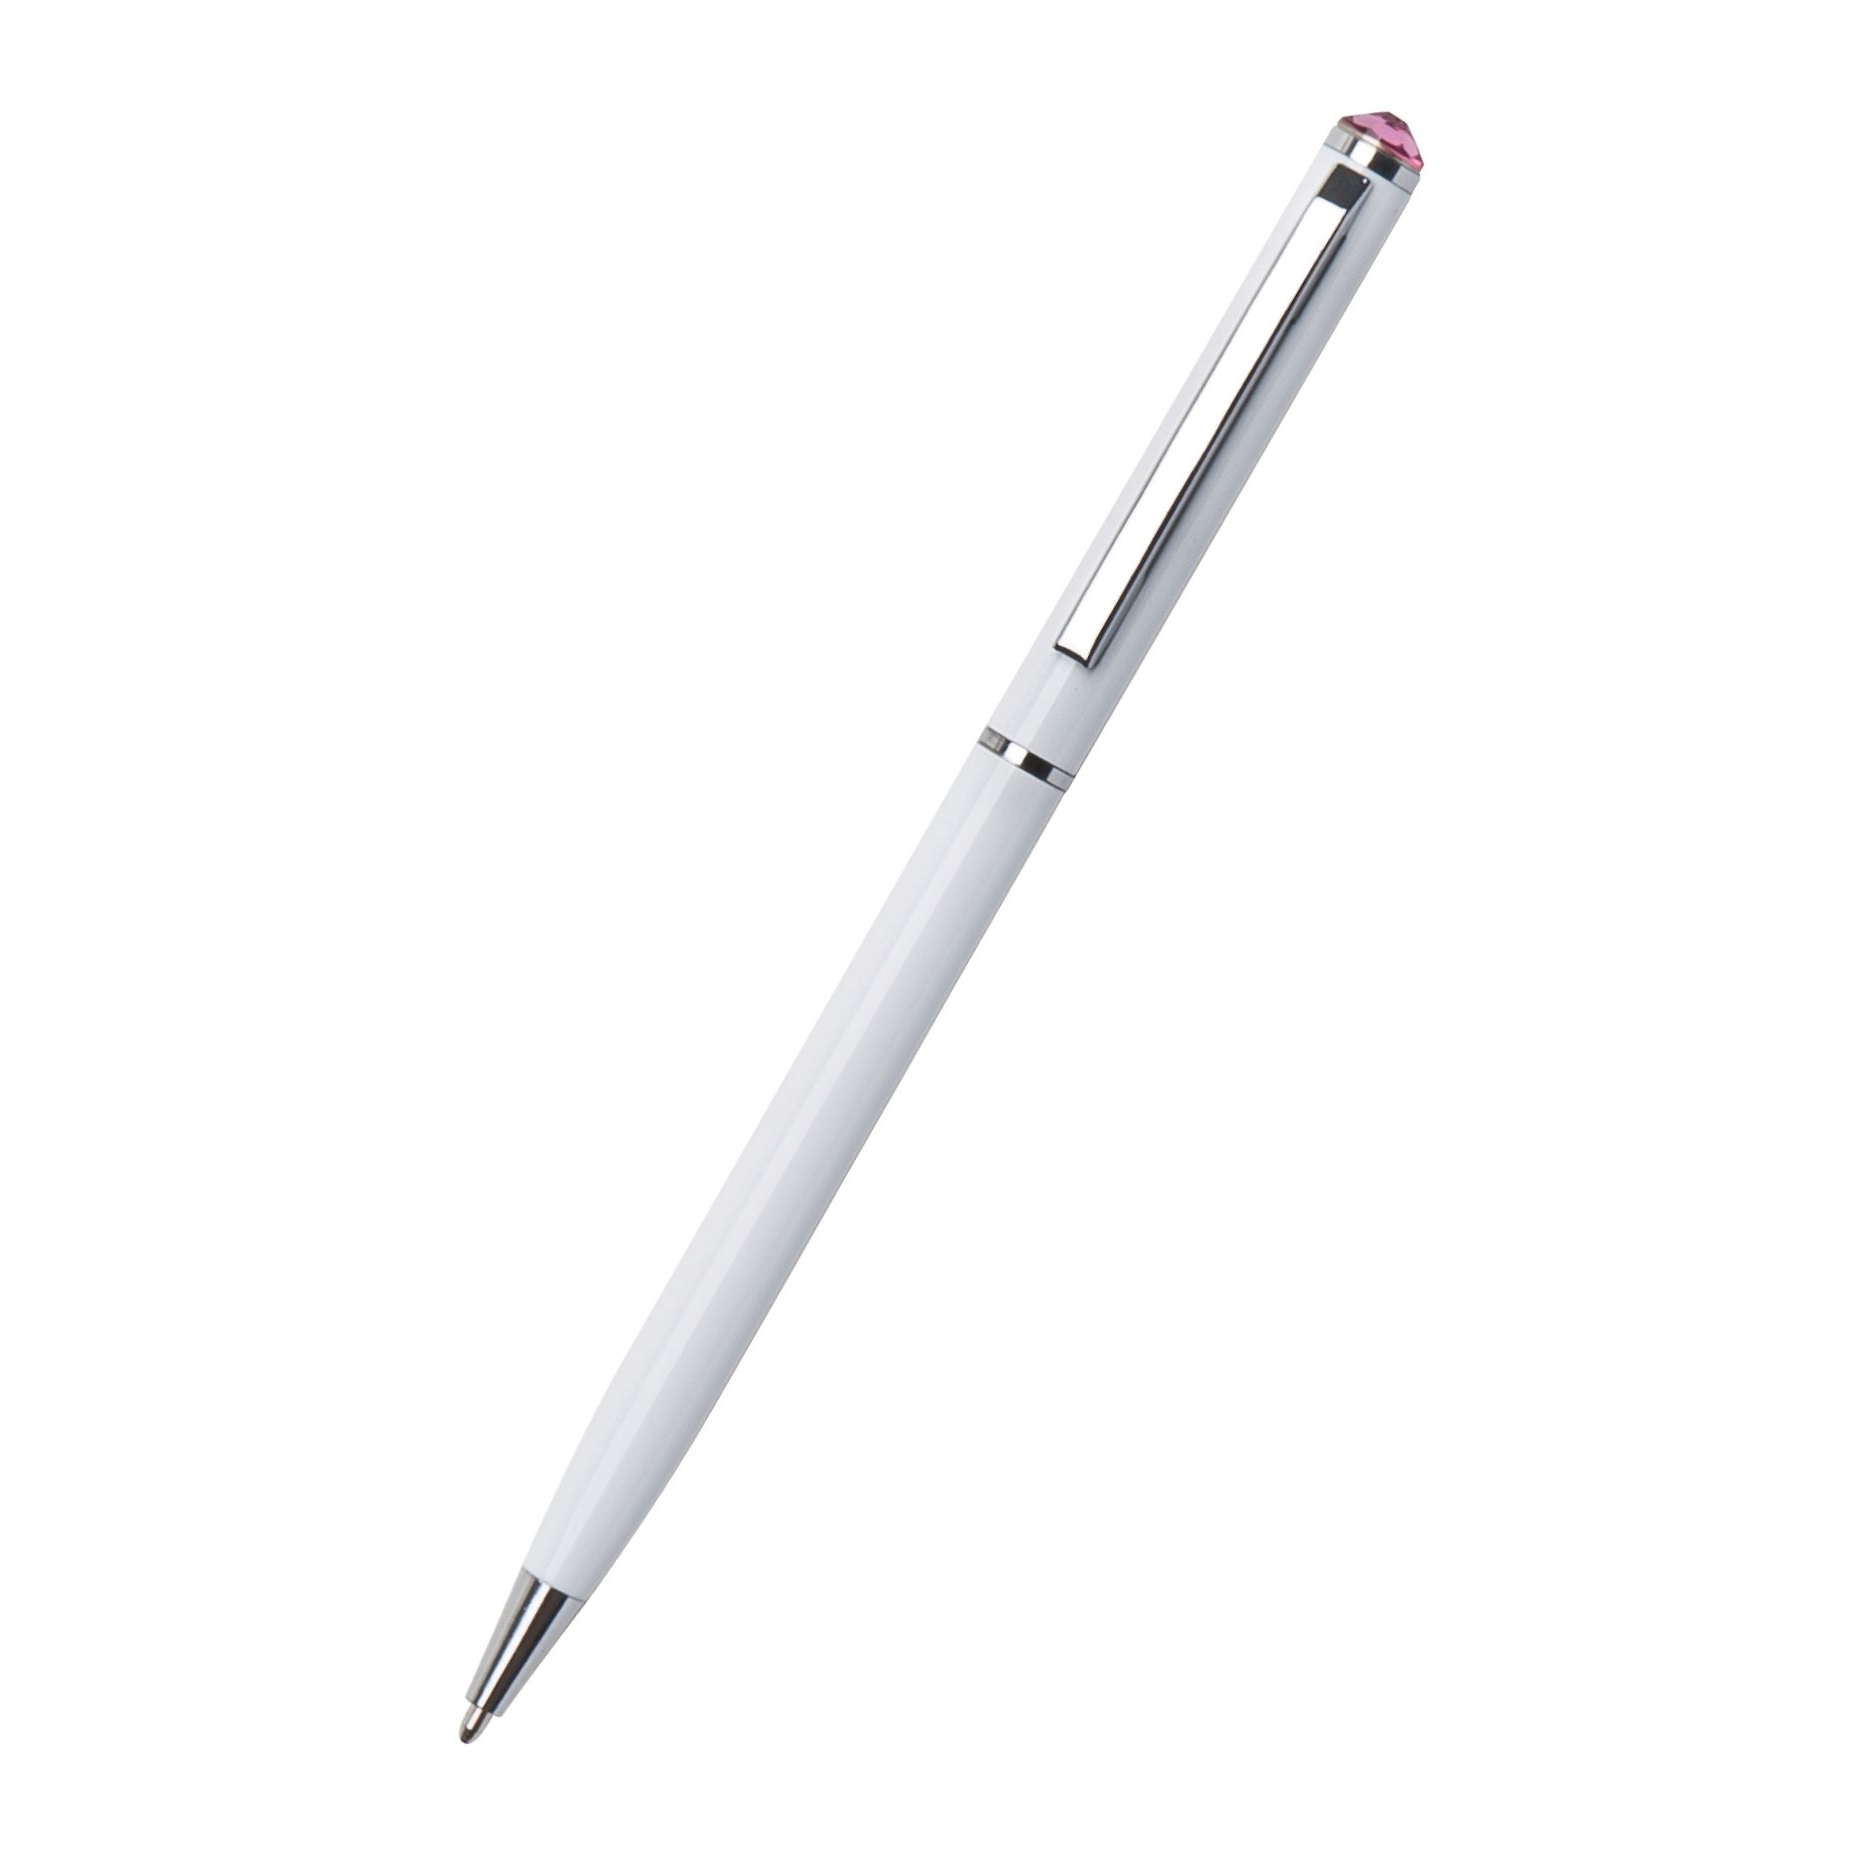 Kuličkové pero Art Crystella Slim bílá, s růžovým krystalem Swarovski